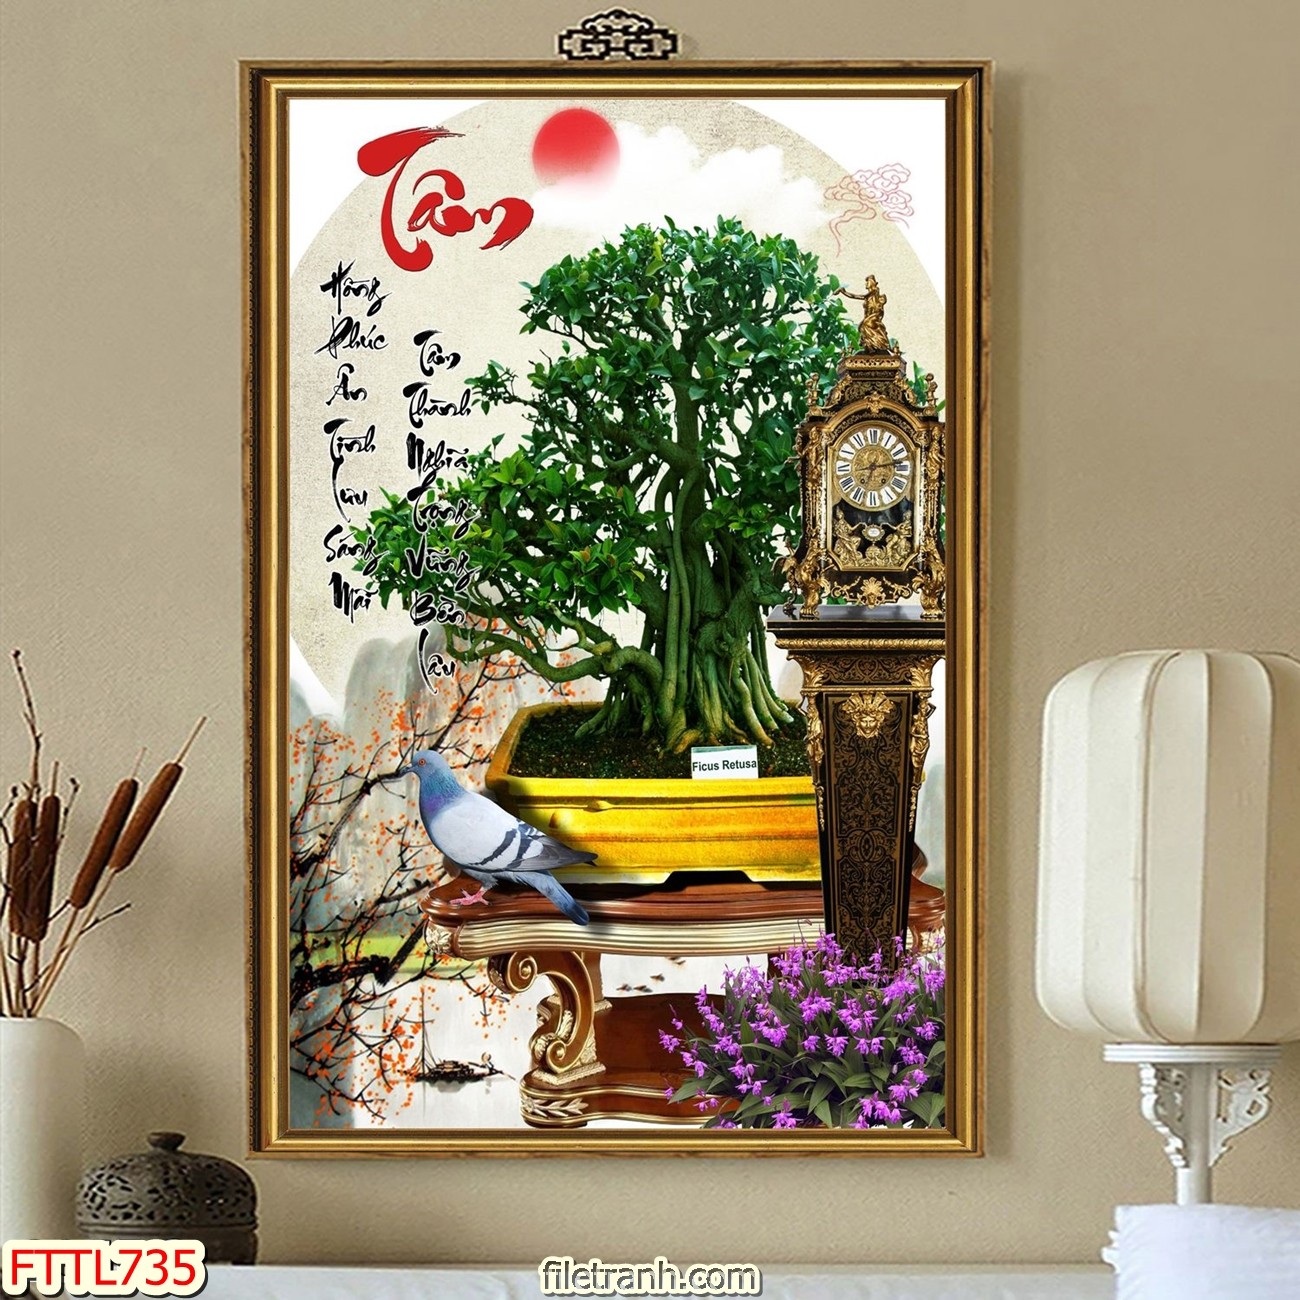 https://filetranh.com/file-tranh-chau-mai-bonsai/file-tranh-chau-mai-bonsai-fttl735.html